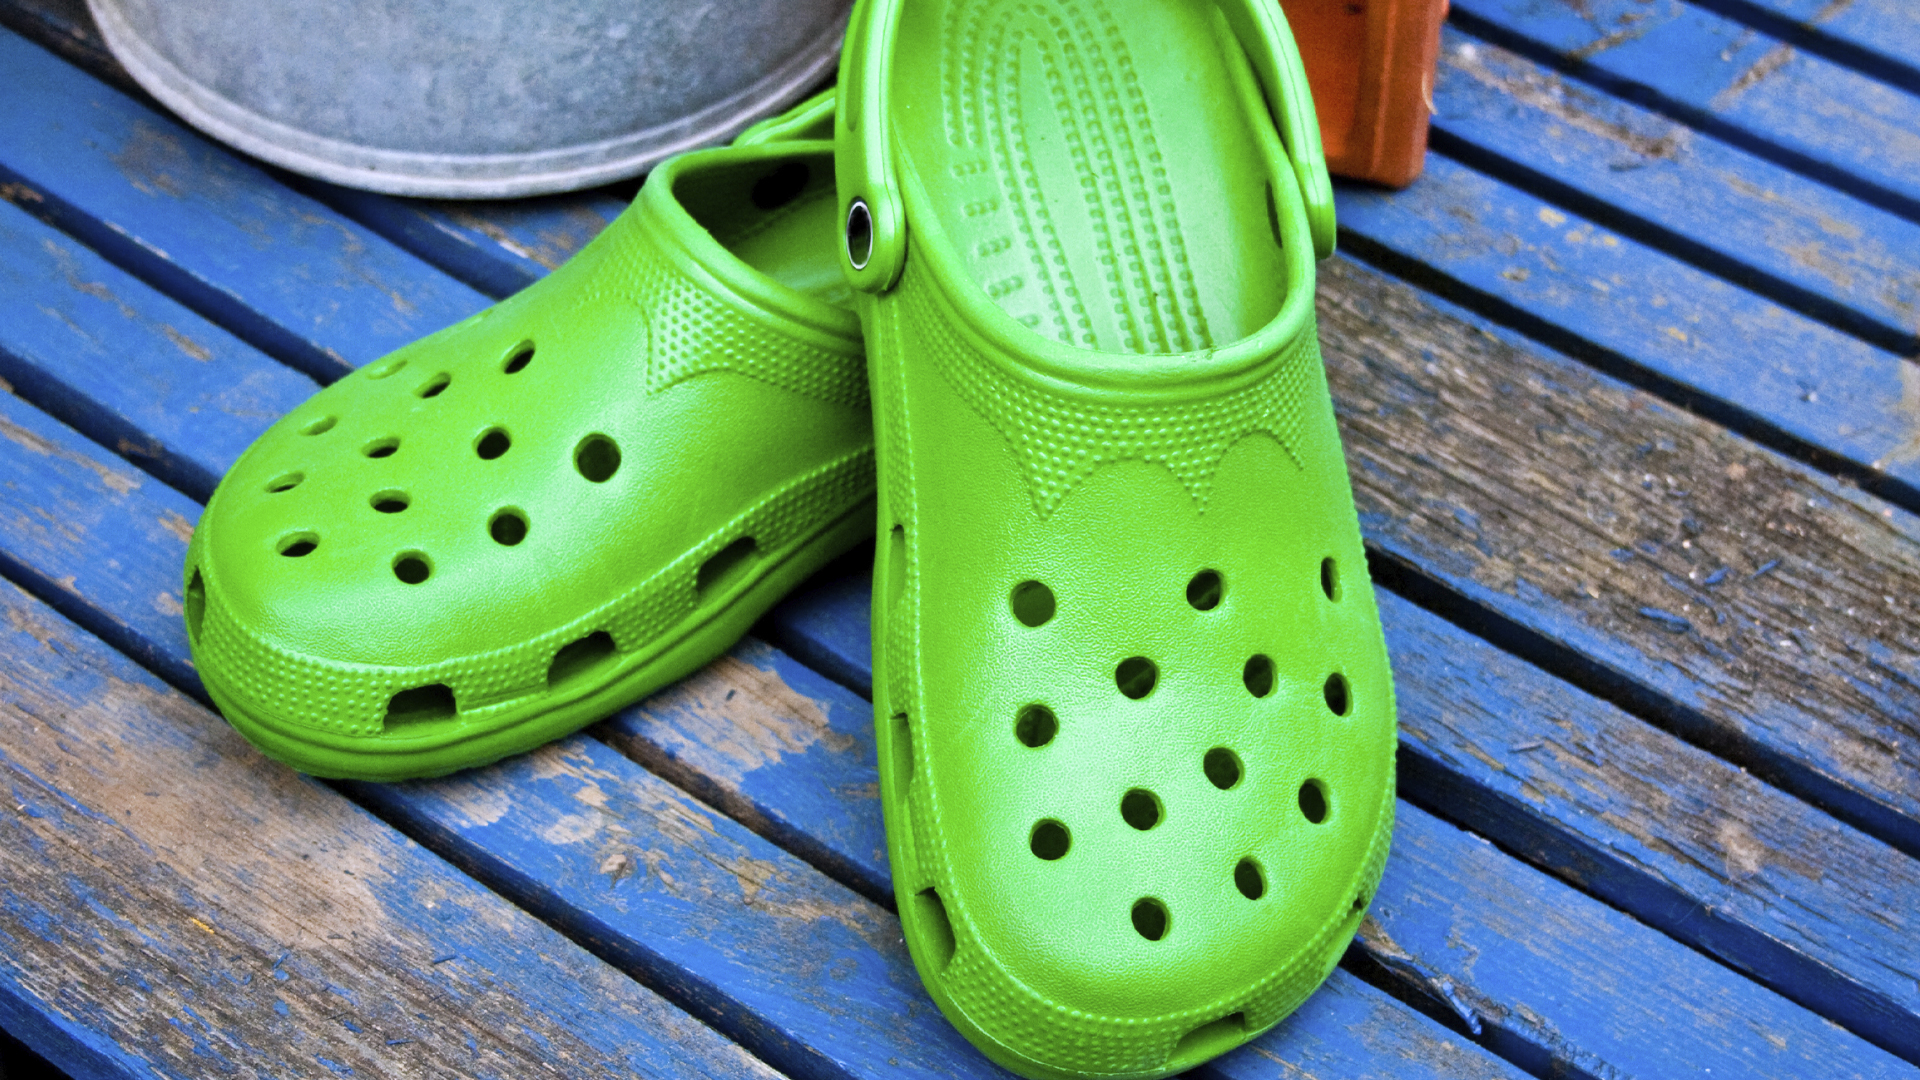 A pair of bright green crocs